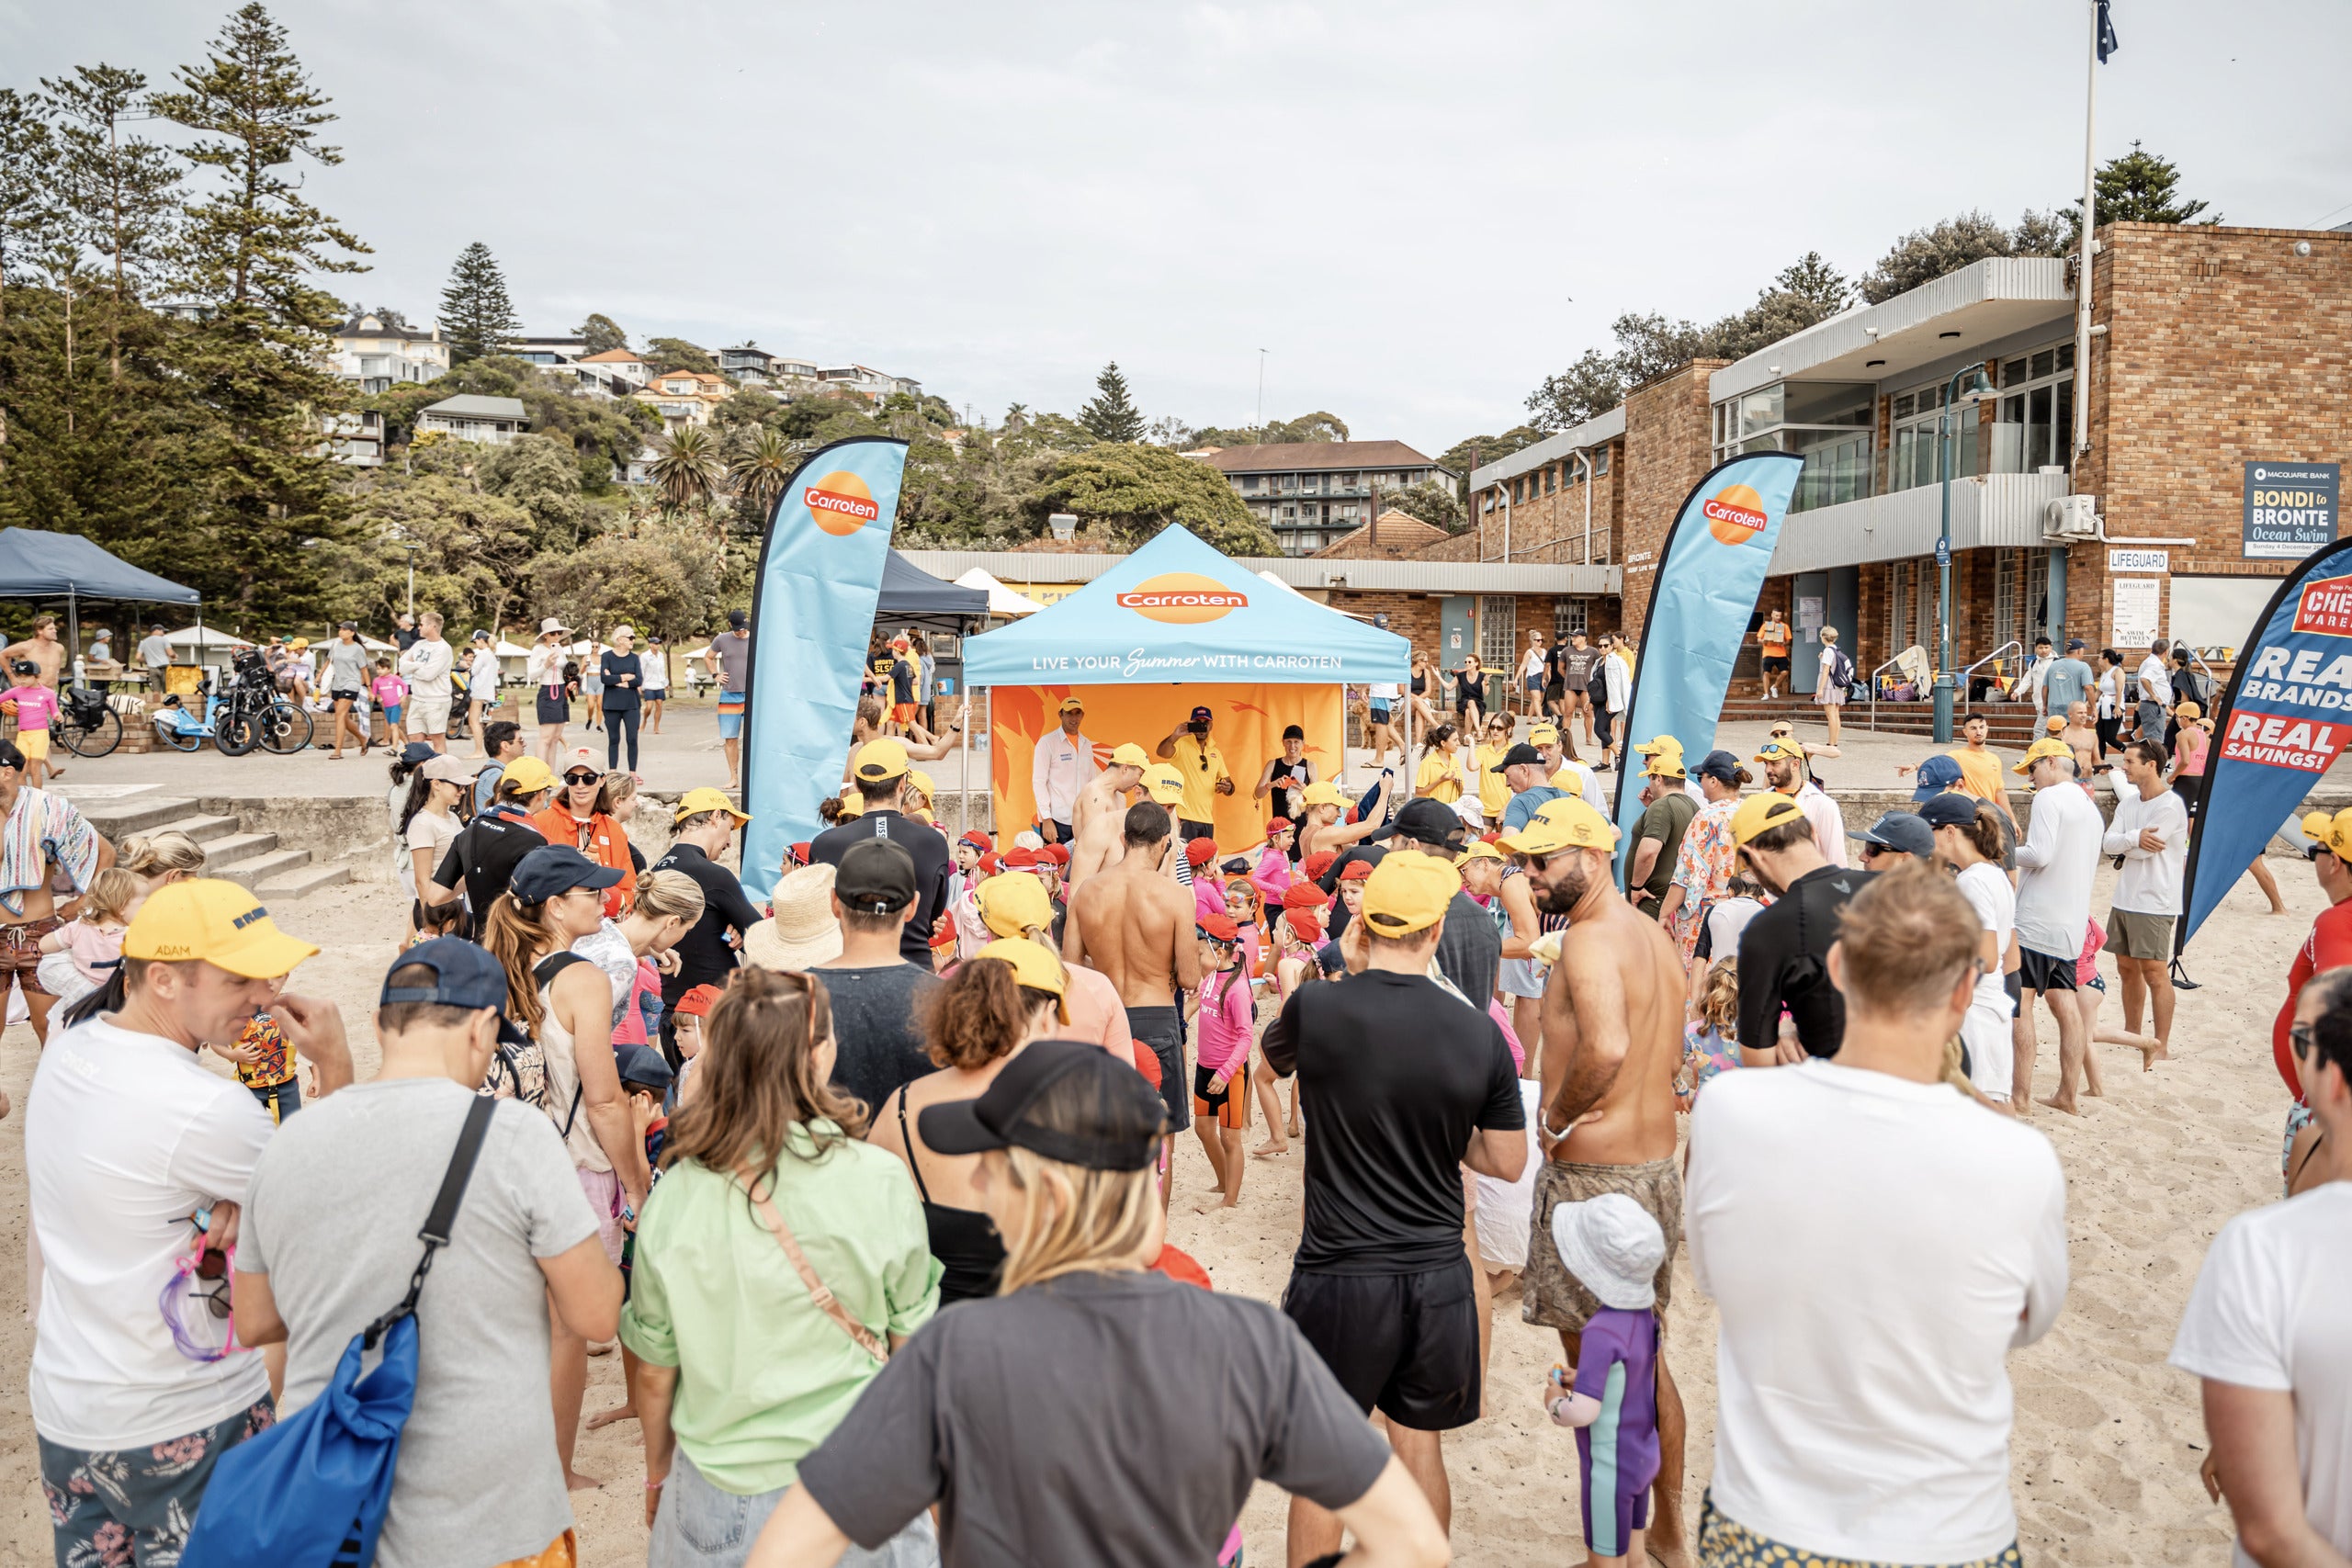 Carroten suncare partnership kicks off on Bronte Beach in Sydney